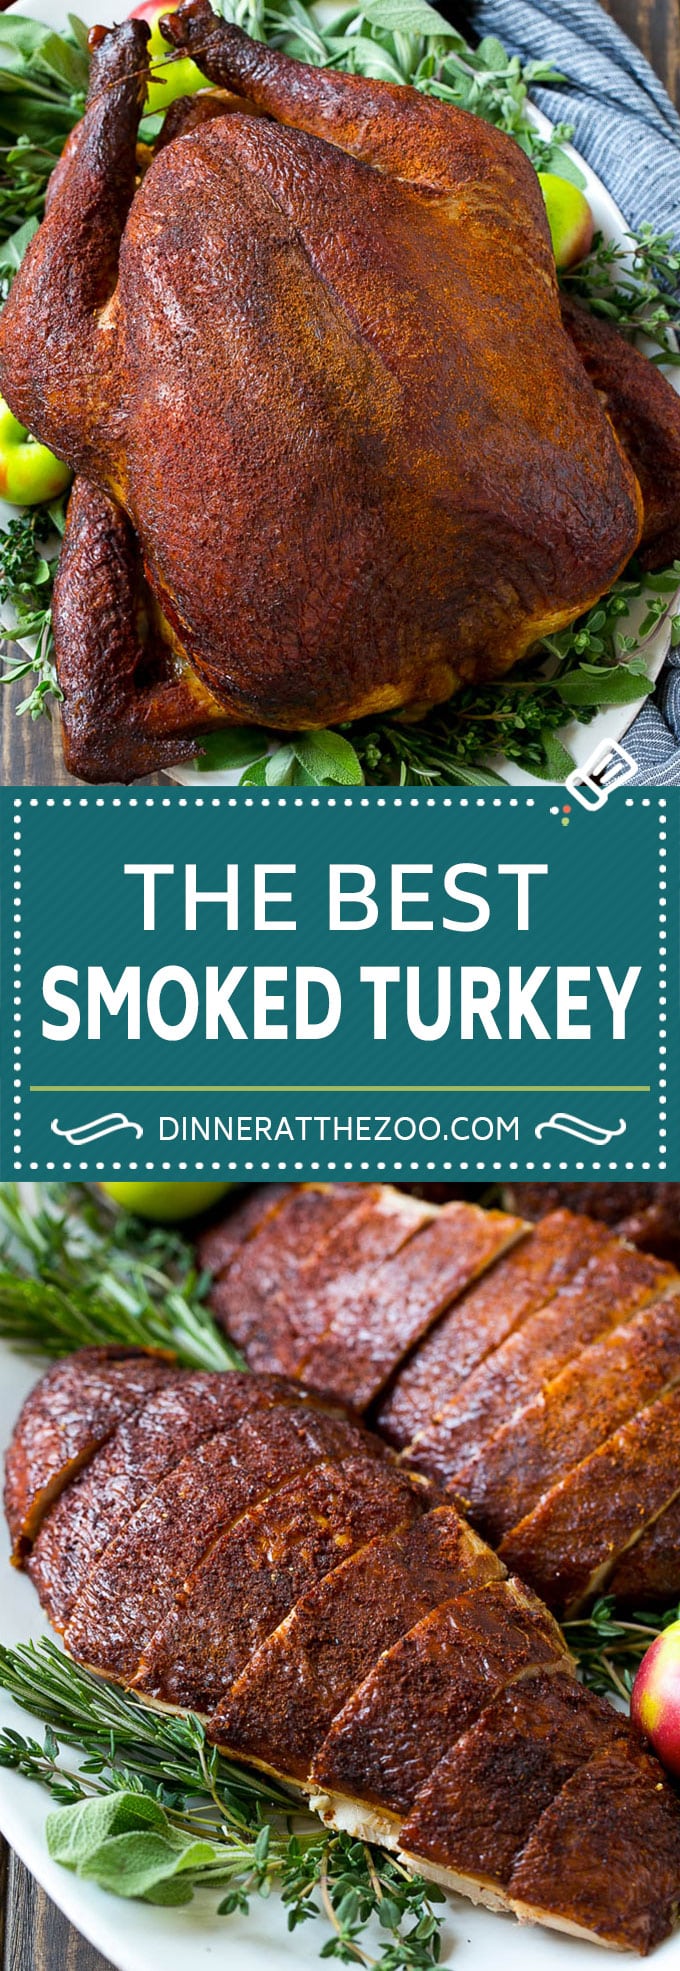 Smoked Turkey Recipe | Thanksgiving Turkey | Holiday Turkey #turkey #thanksgiving #christmas #dinner #dinneratthezoo #smoker